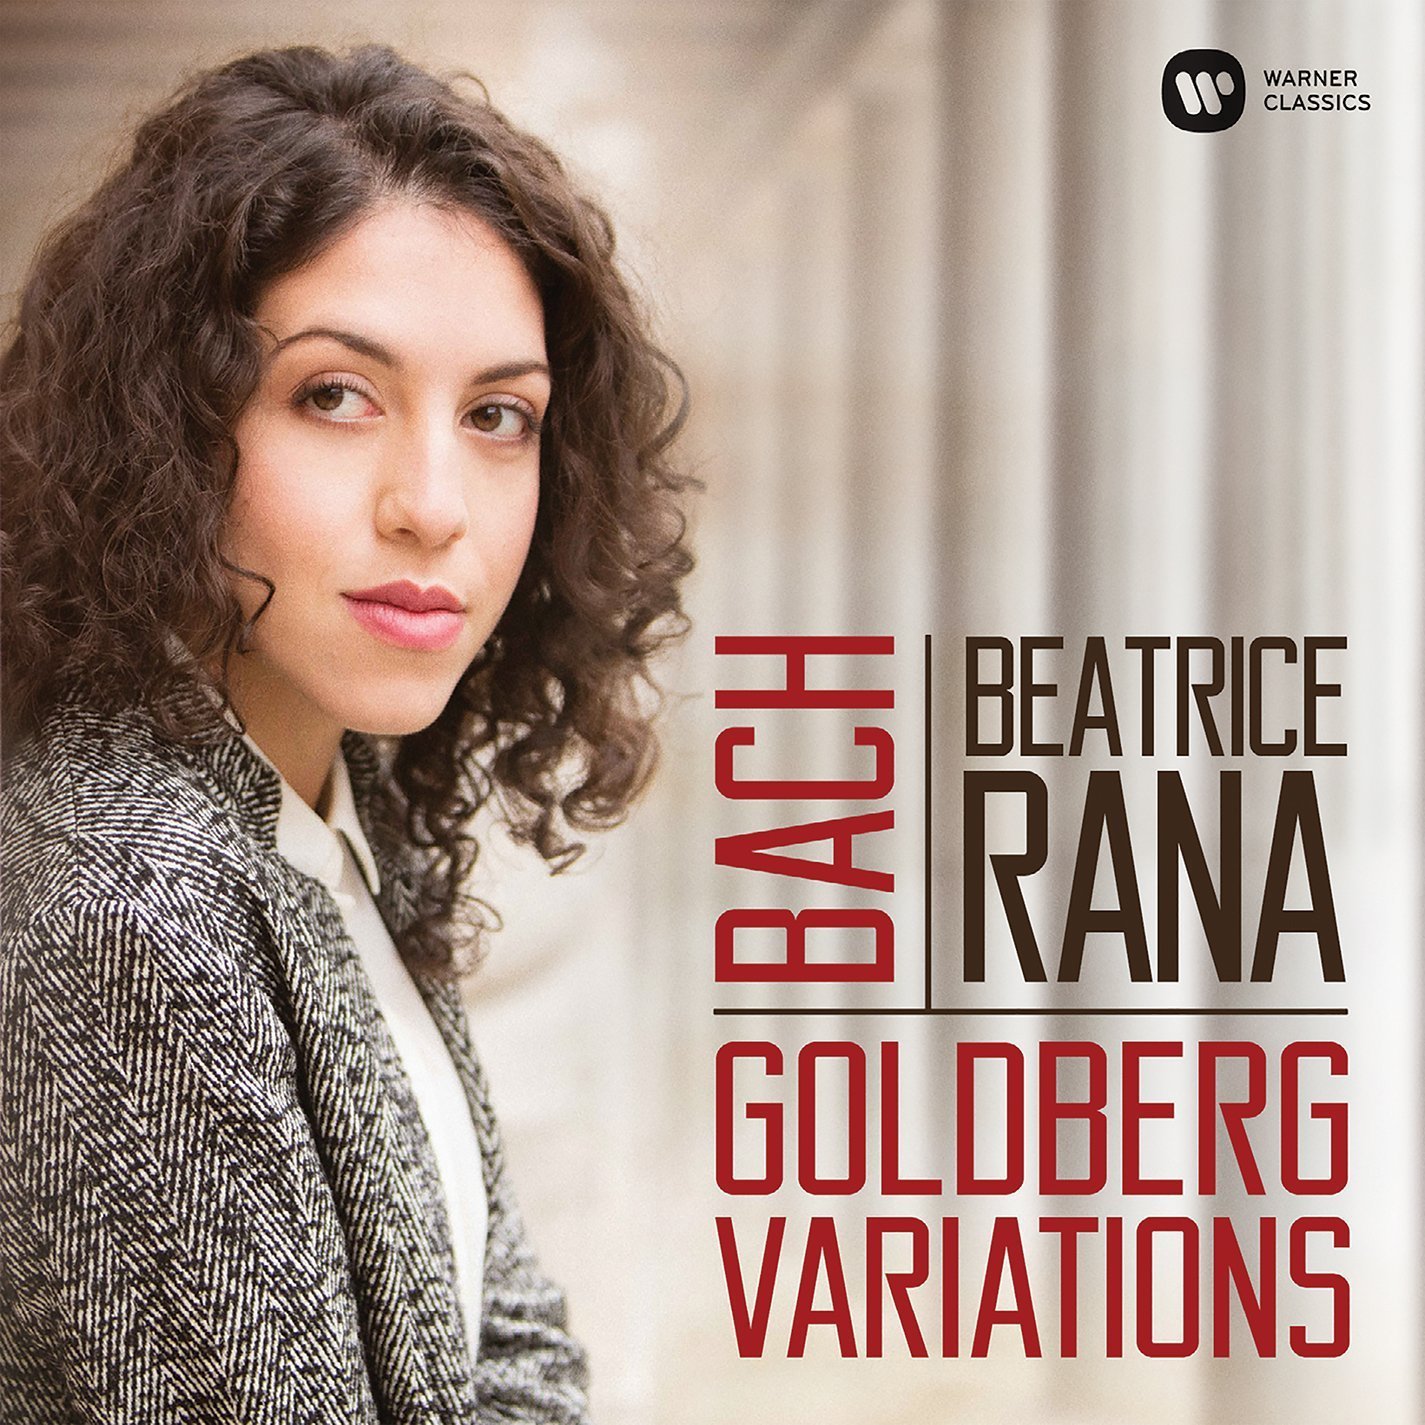 Goldberg Variations | Beatrice Rana